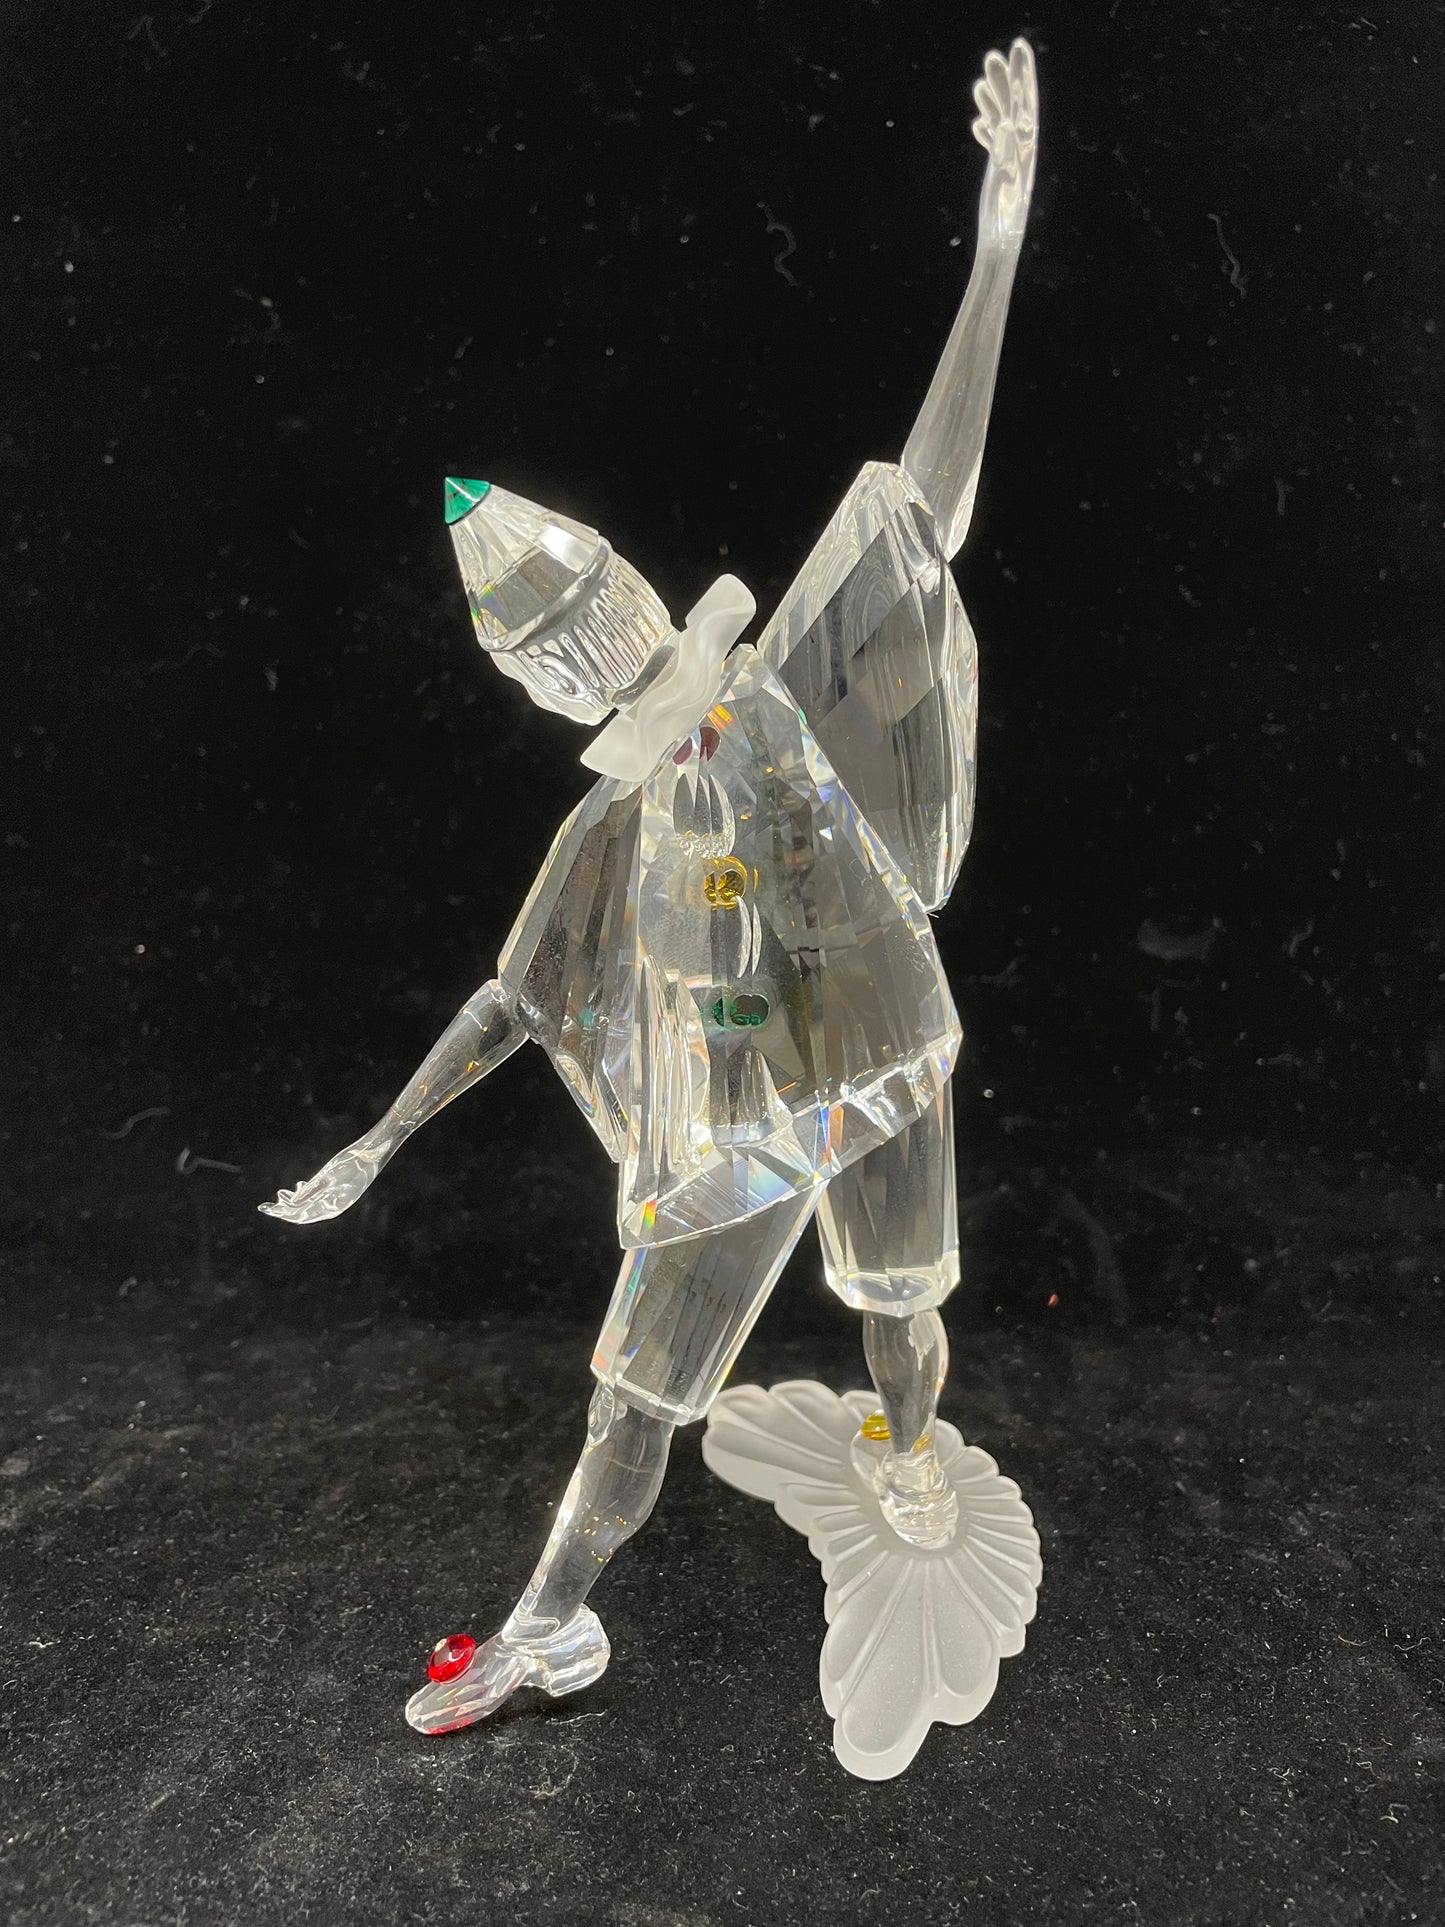 Swarovski "Pierrot" SCS 1999 Crystal Figurine